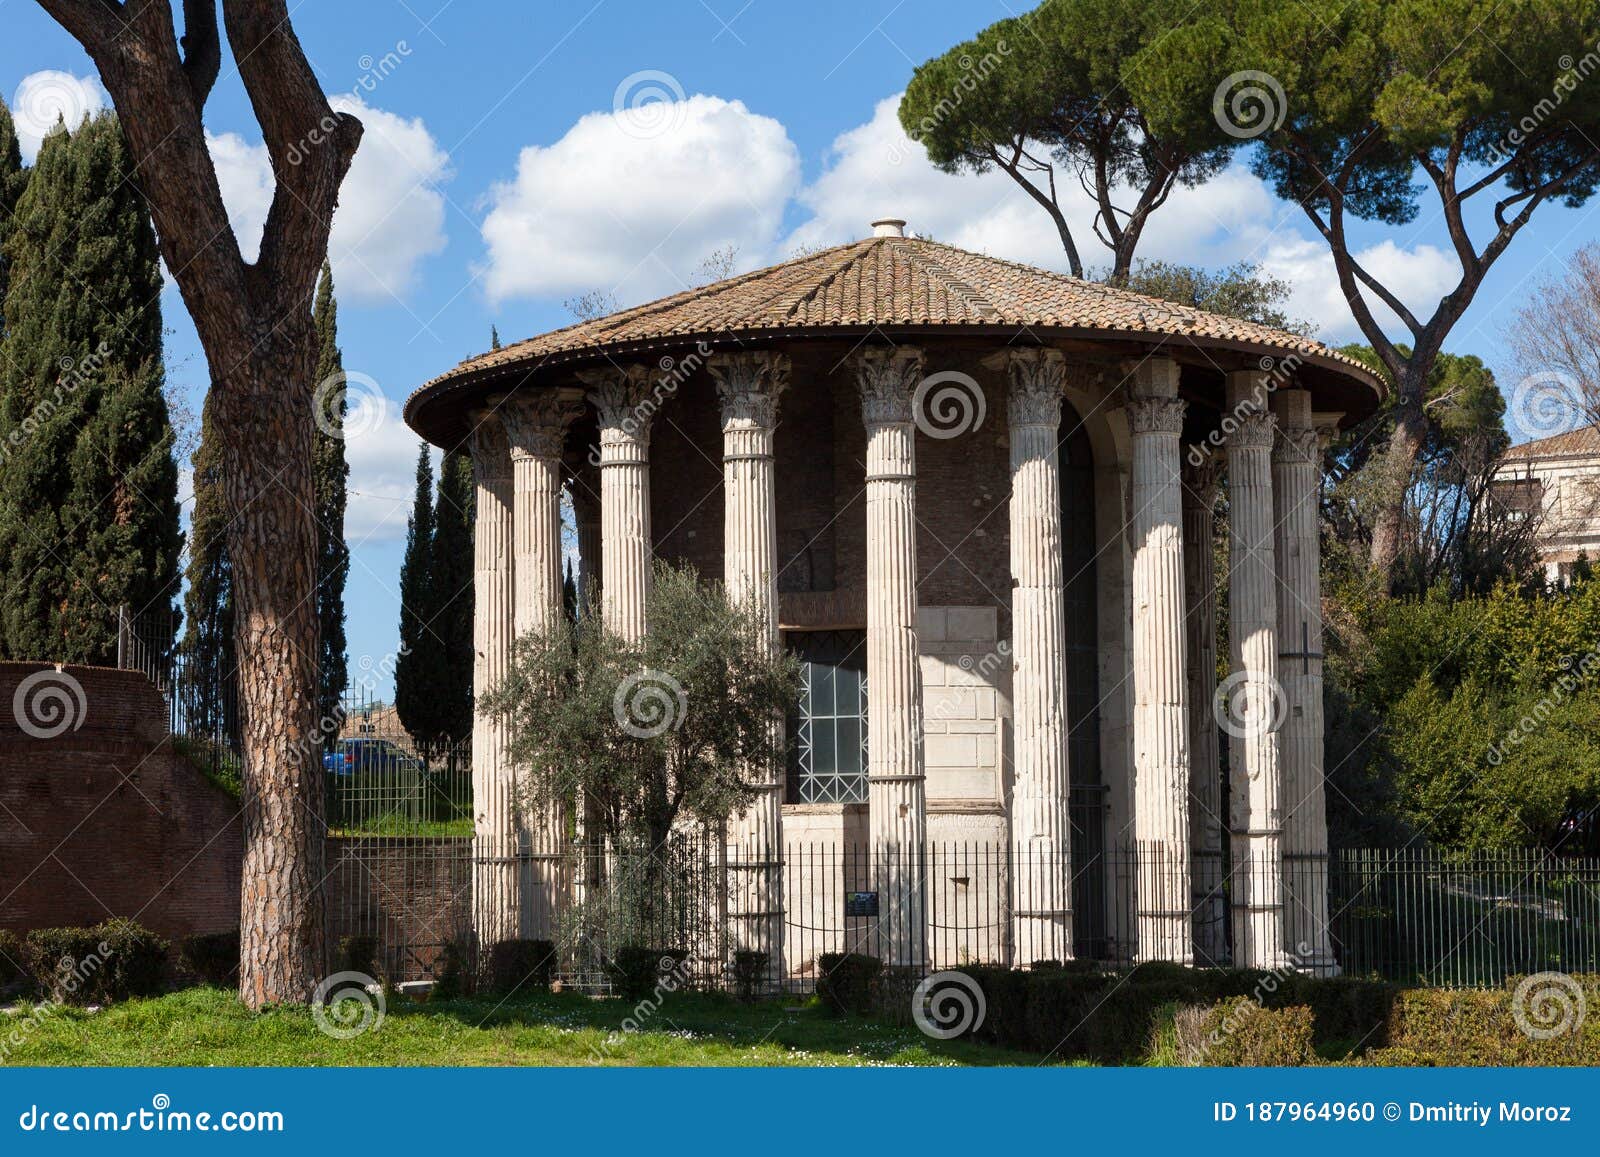 the temple of hercules victor hercules the winner tempio di ercole vincitore or hercules olivarius. roman round temple in piaz